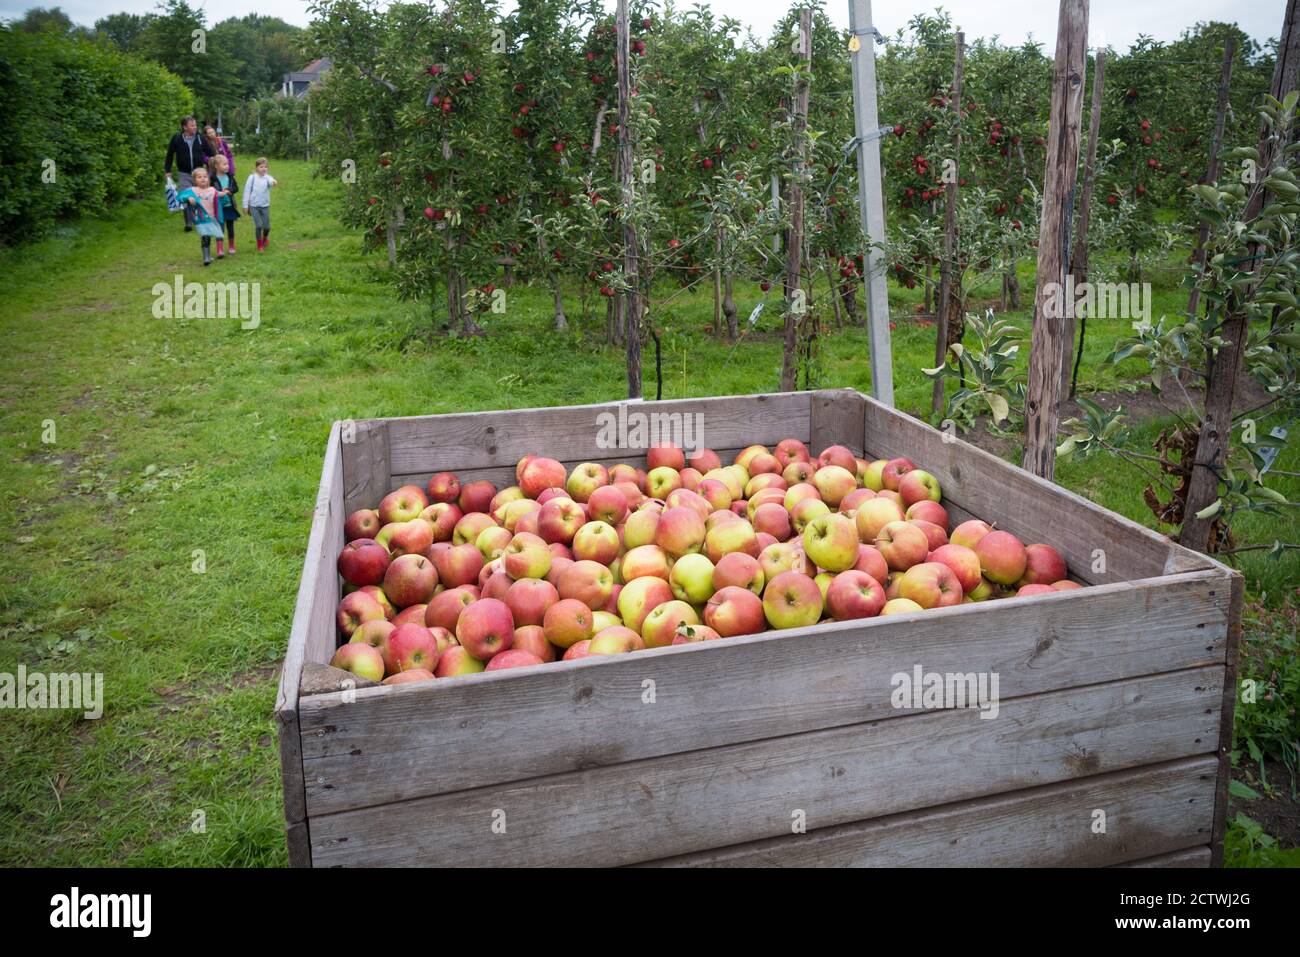 BUNNIK, NETHERLANDS - SEPTEMBER 12, 2020: ripe elstar apples in large crates during national fruit pick day Stock Photo